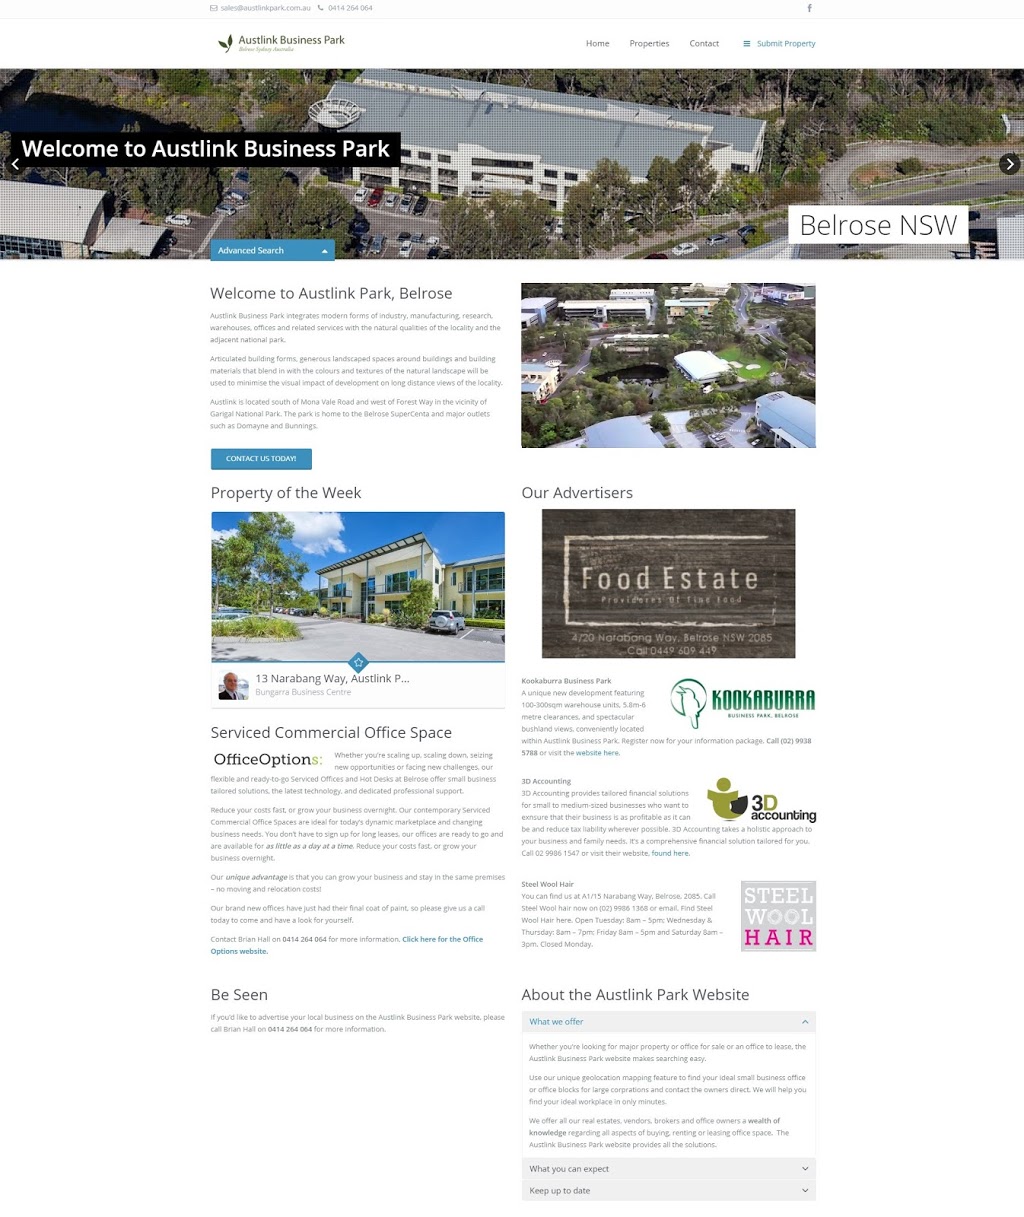 CKL Web Concepts |  | 62 Bellevue St, Shelly Beach NSW 2261, Australia | 0402027801 OR +61 402 027 801